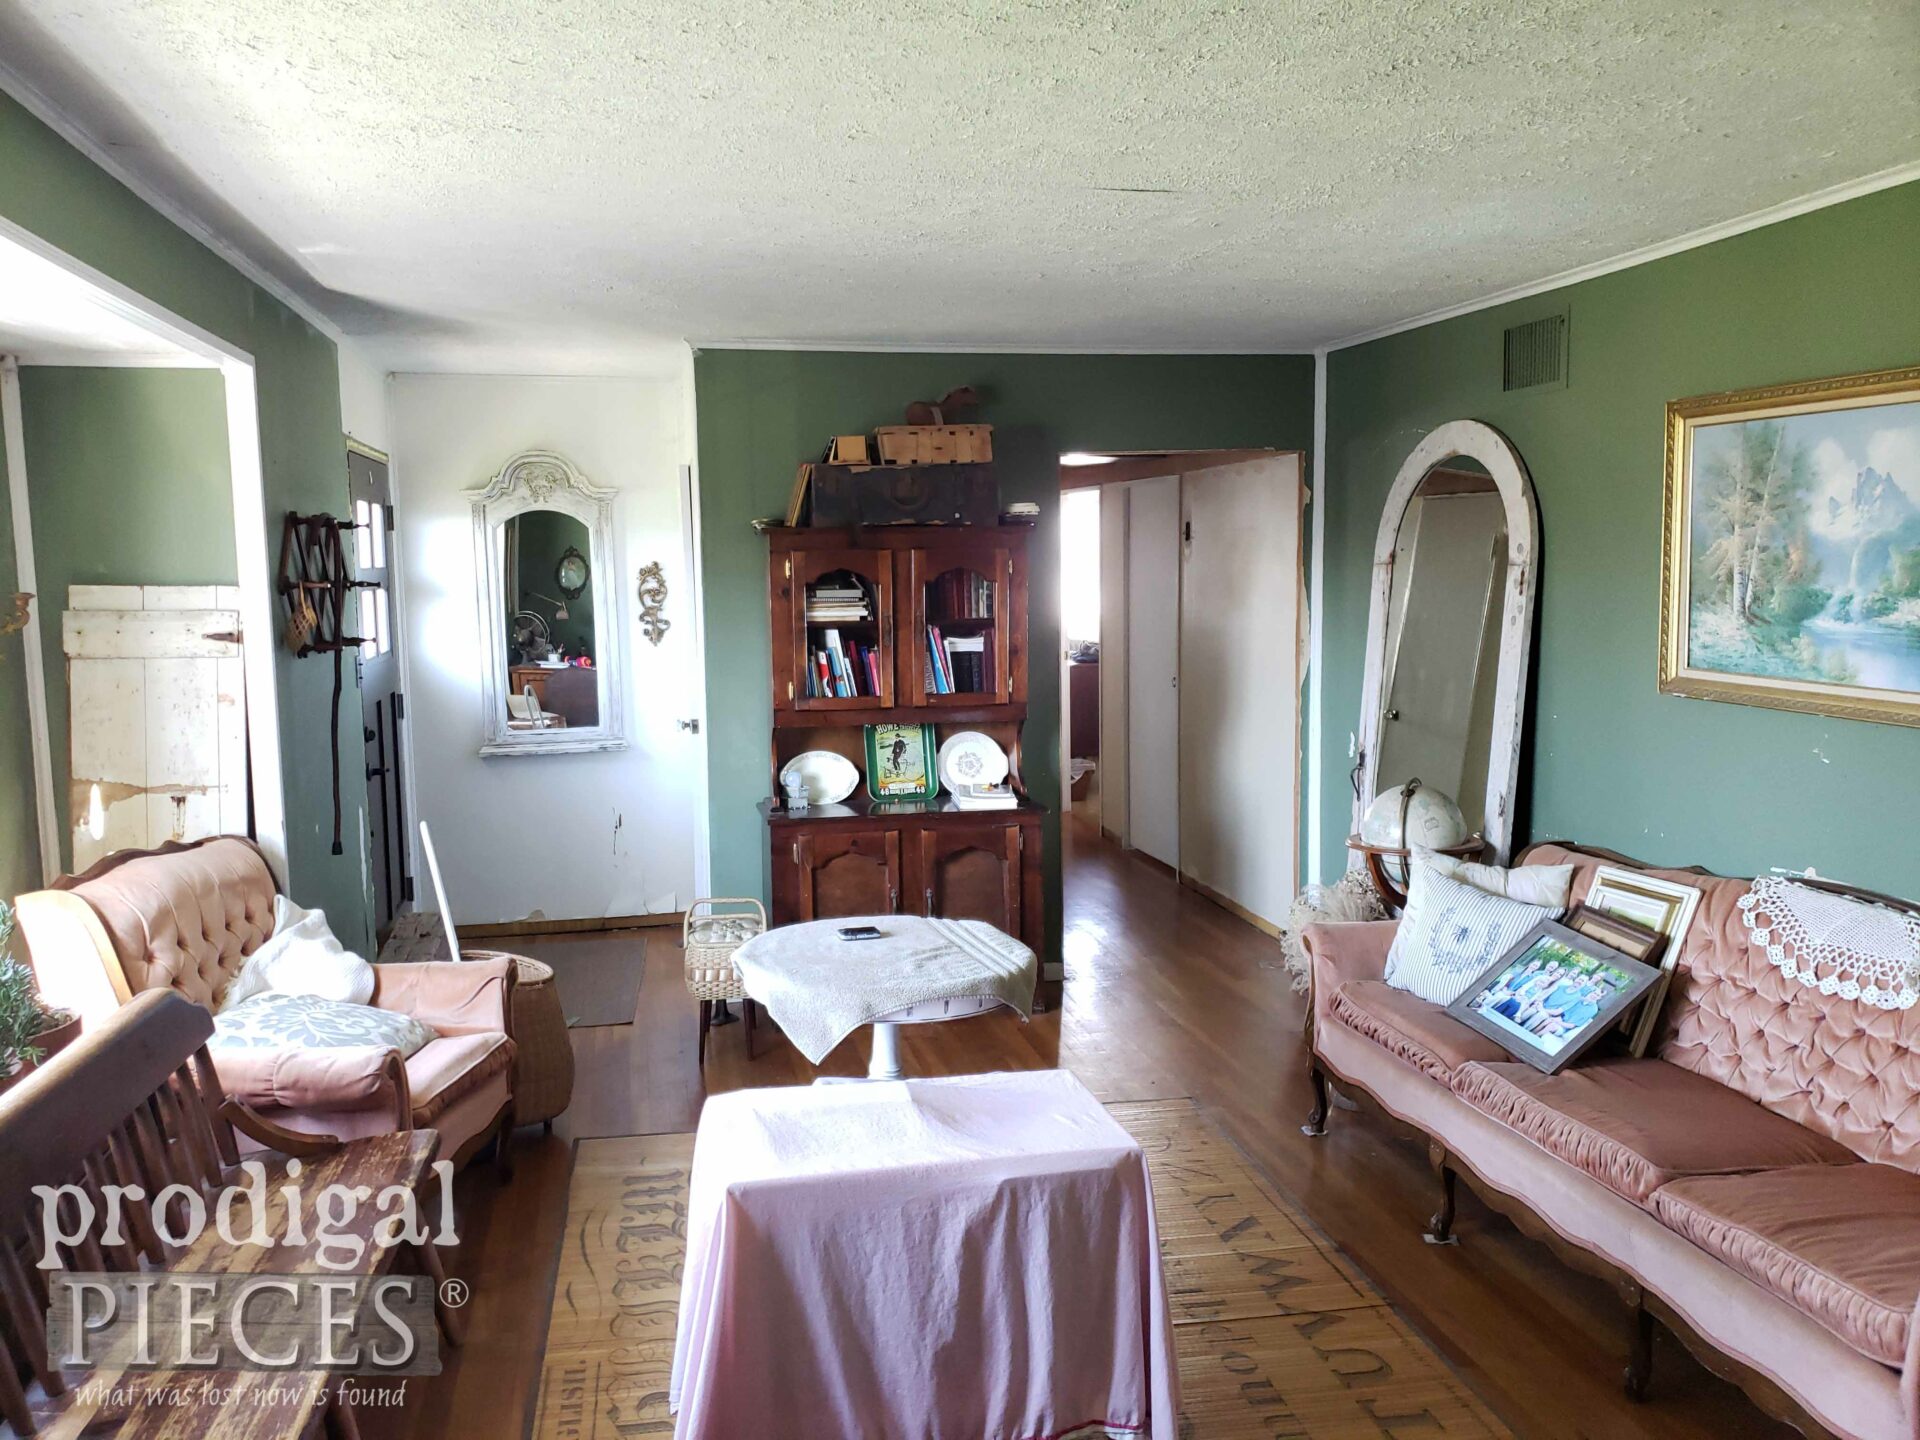 Living Room Before Remodel | prodigalpieces.com #prodigalpieces